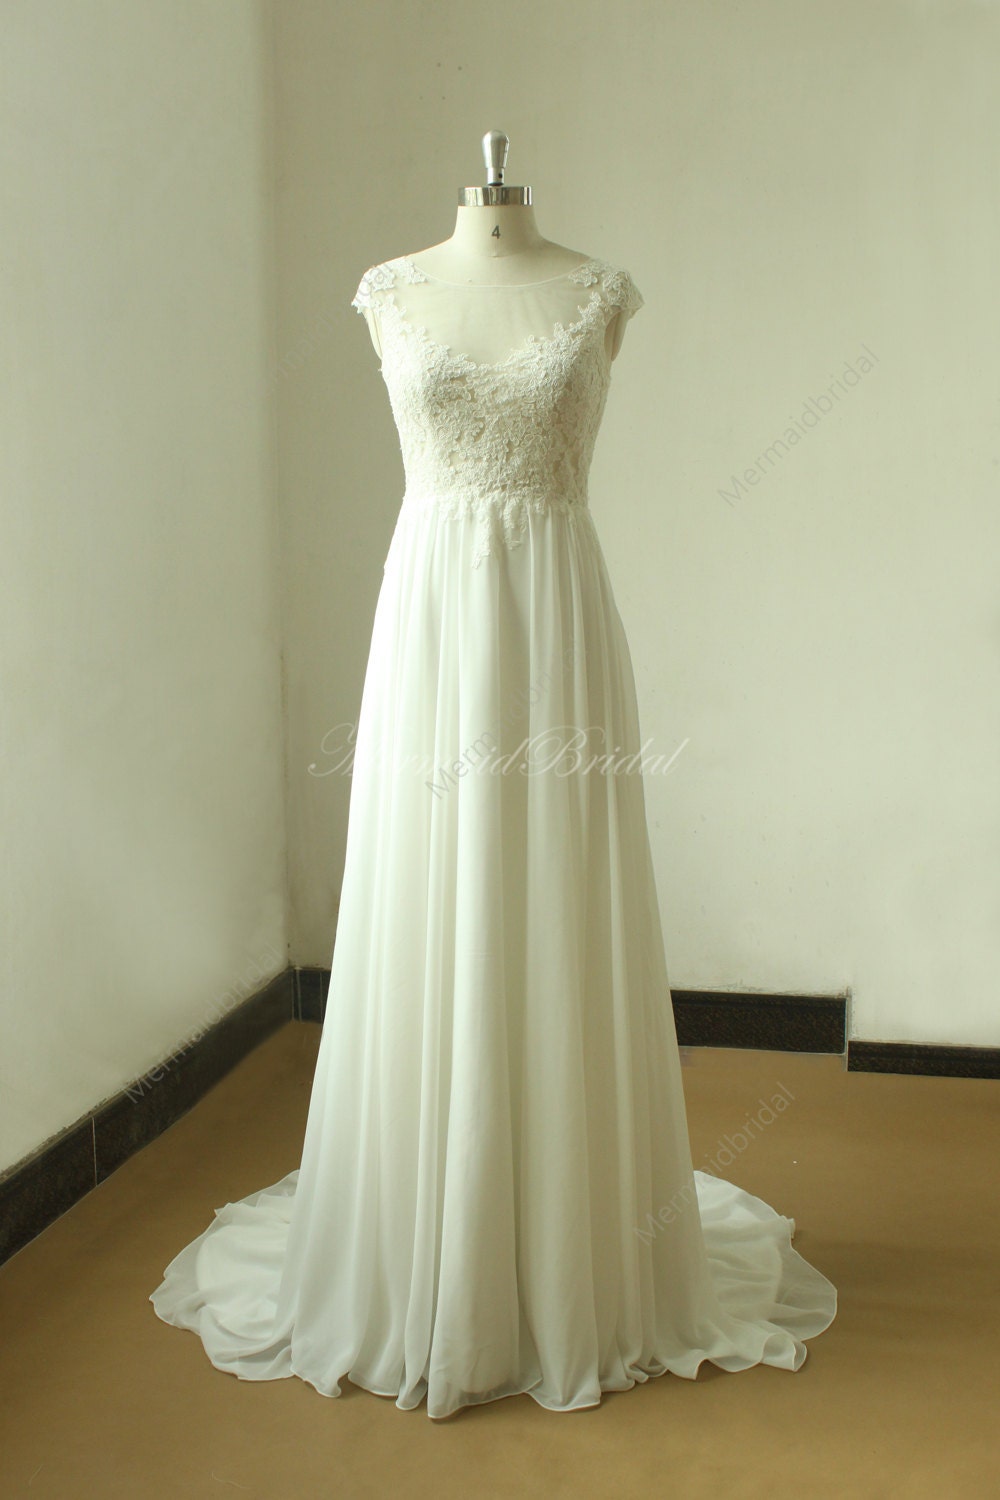 Stunning Backless Ivory a Line Chiffon Lace Wedding Dress With - Etsy